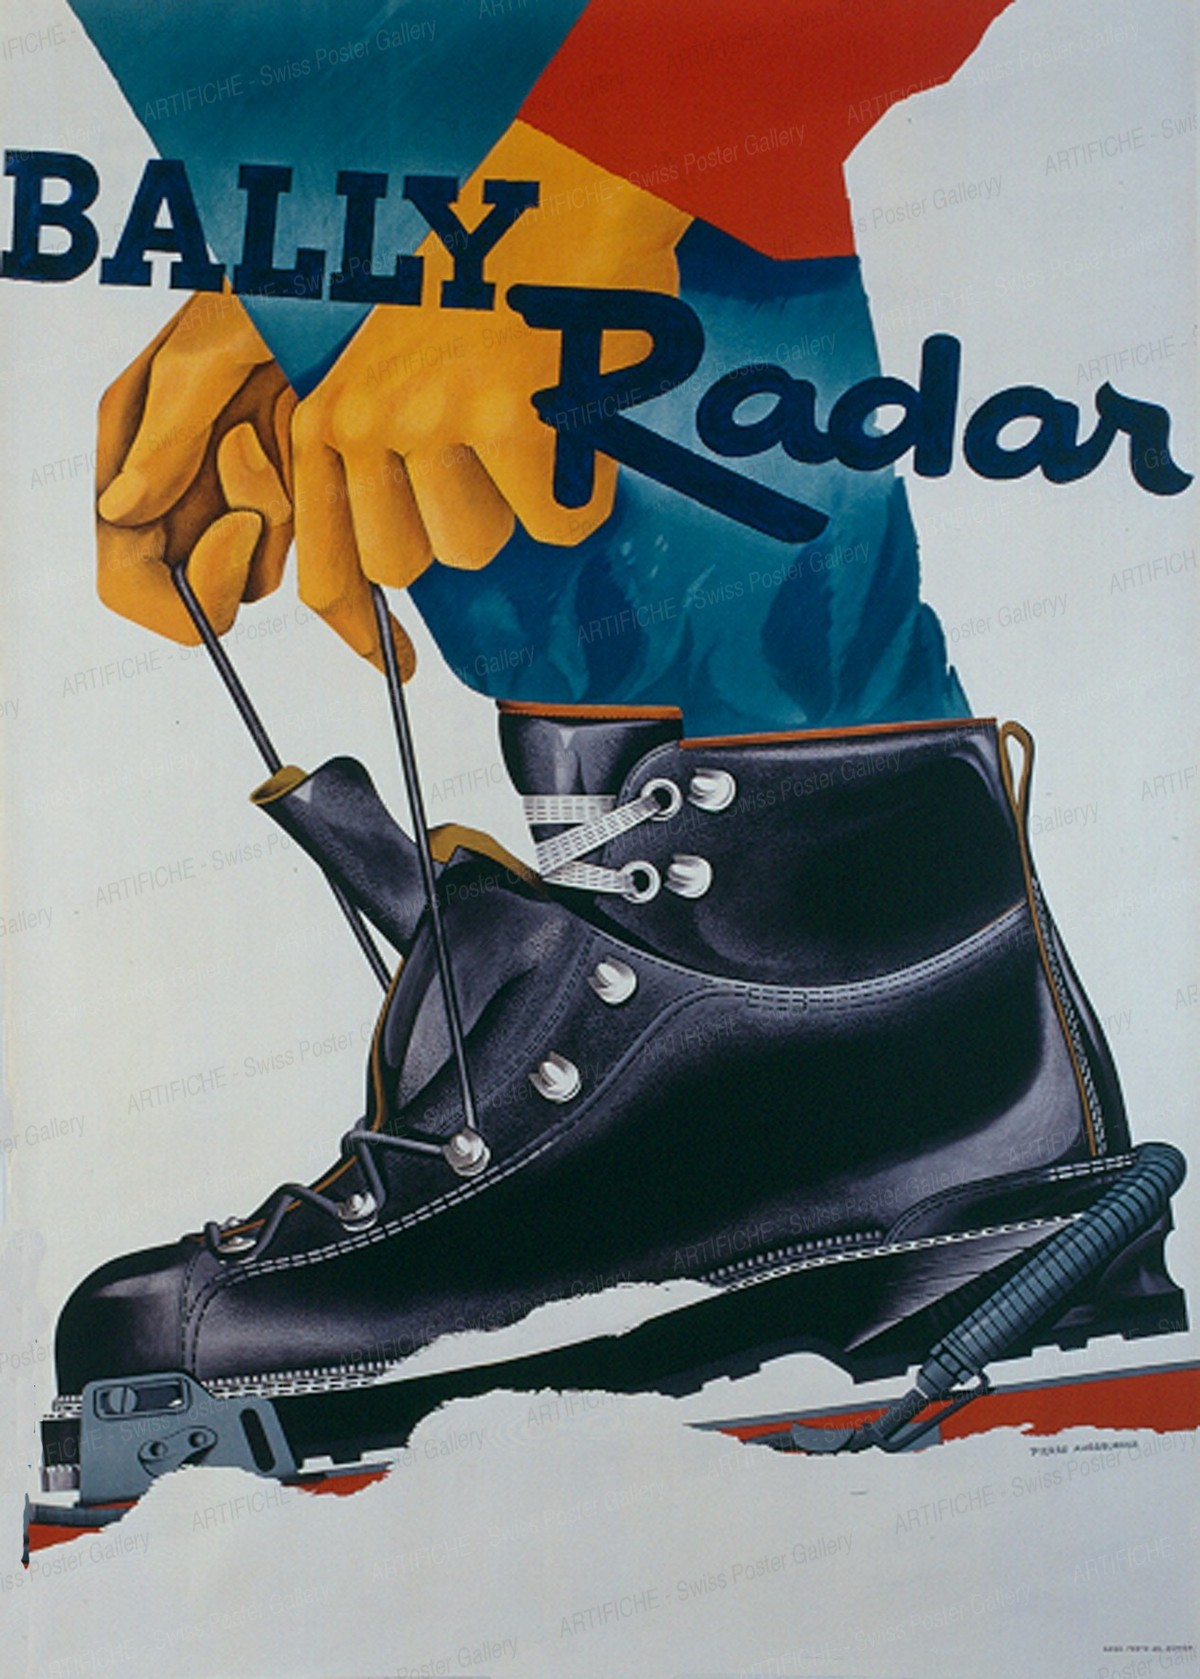 Bally Radar Ski Shoes, Pierre Augsburger